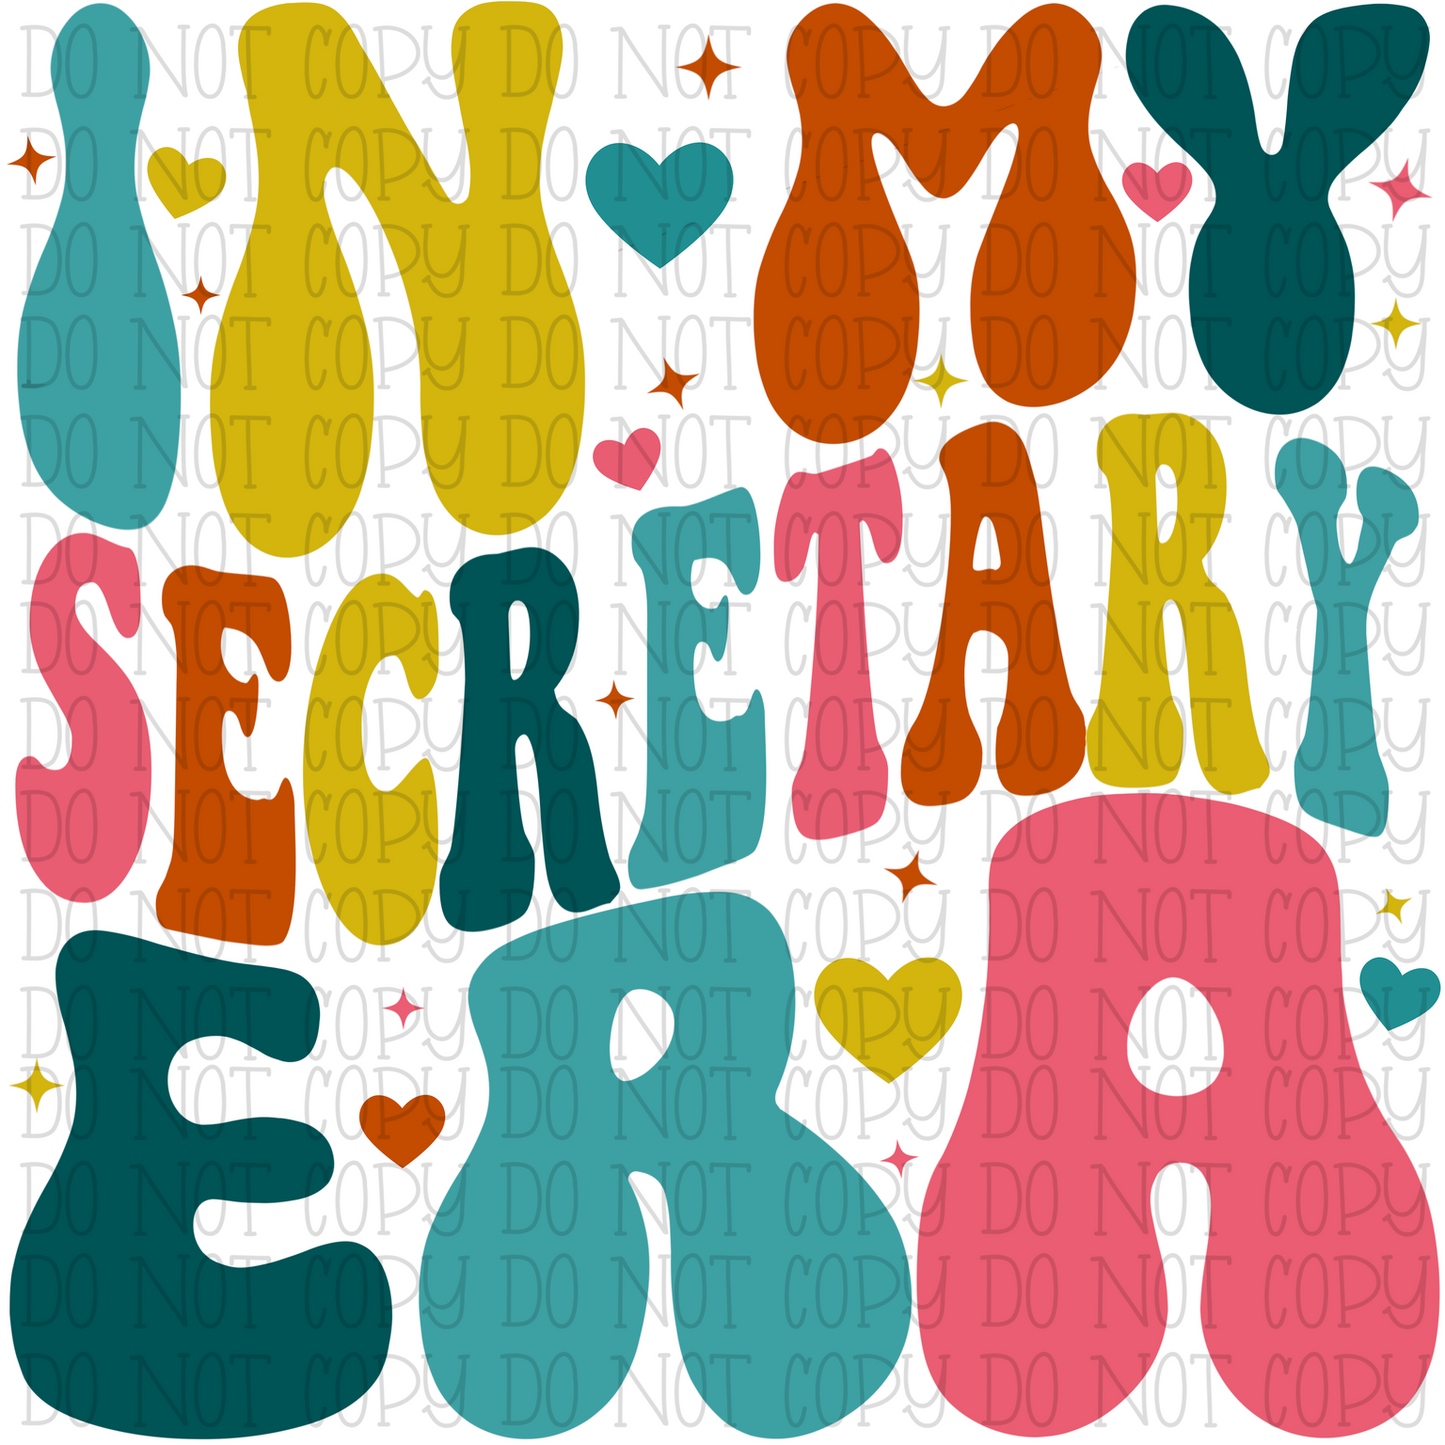 In My Secretary Era - Retro - Groovy - Teacher - Student - Teaching